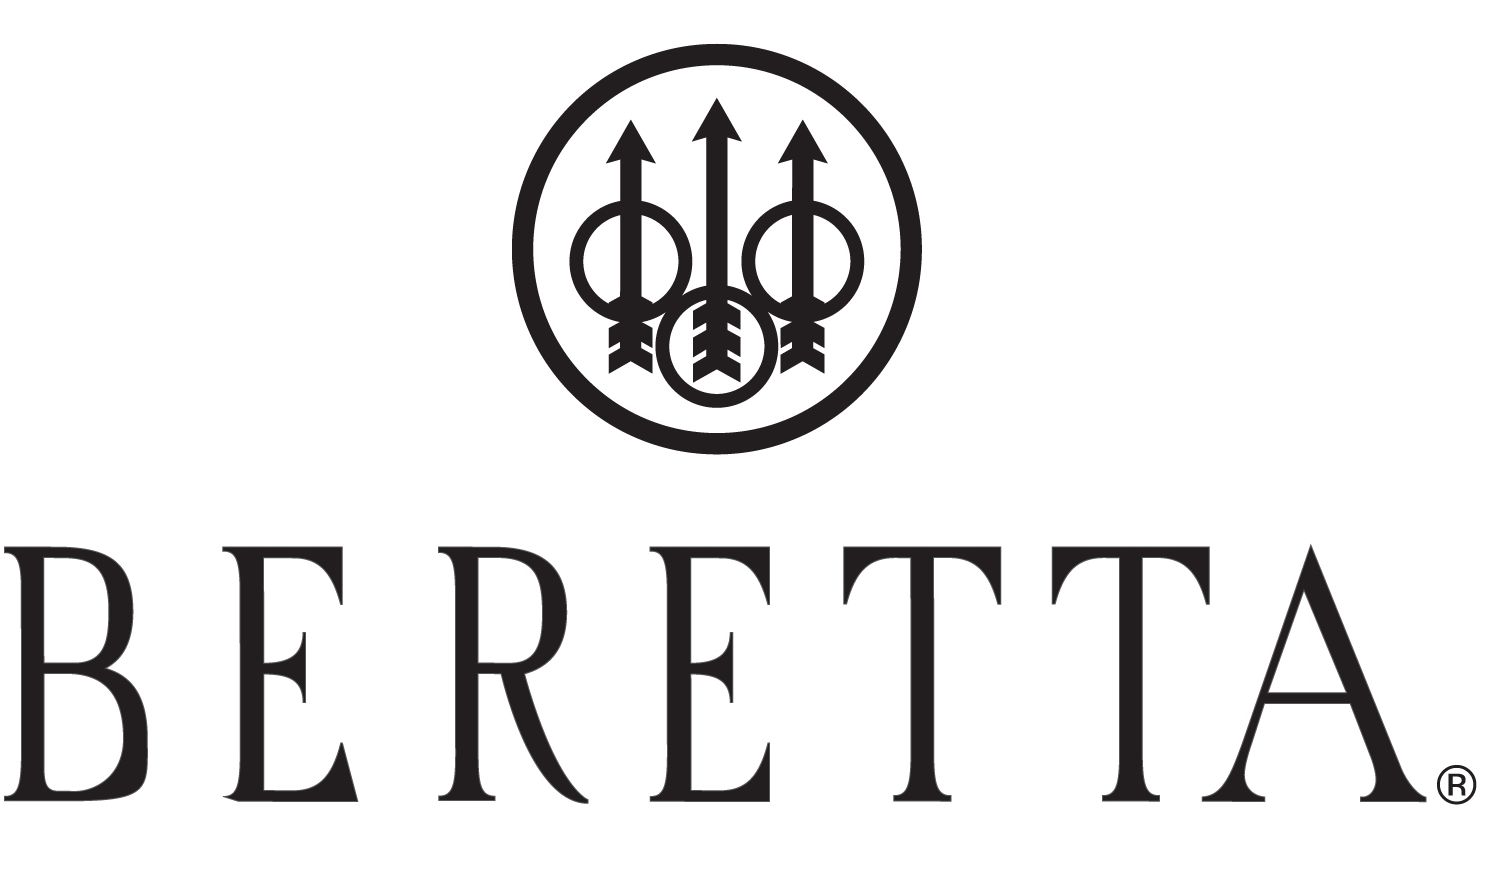 Barreta Logo - p. beretta font - Google Search | shotguns | Shooting sports, Hand ...